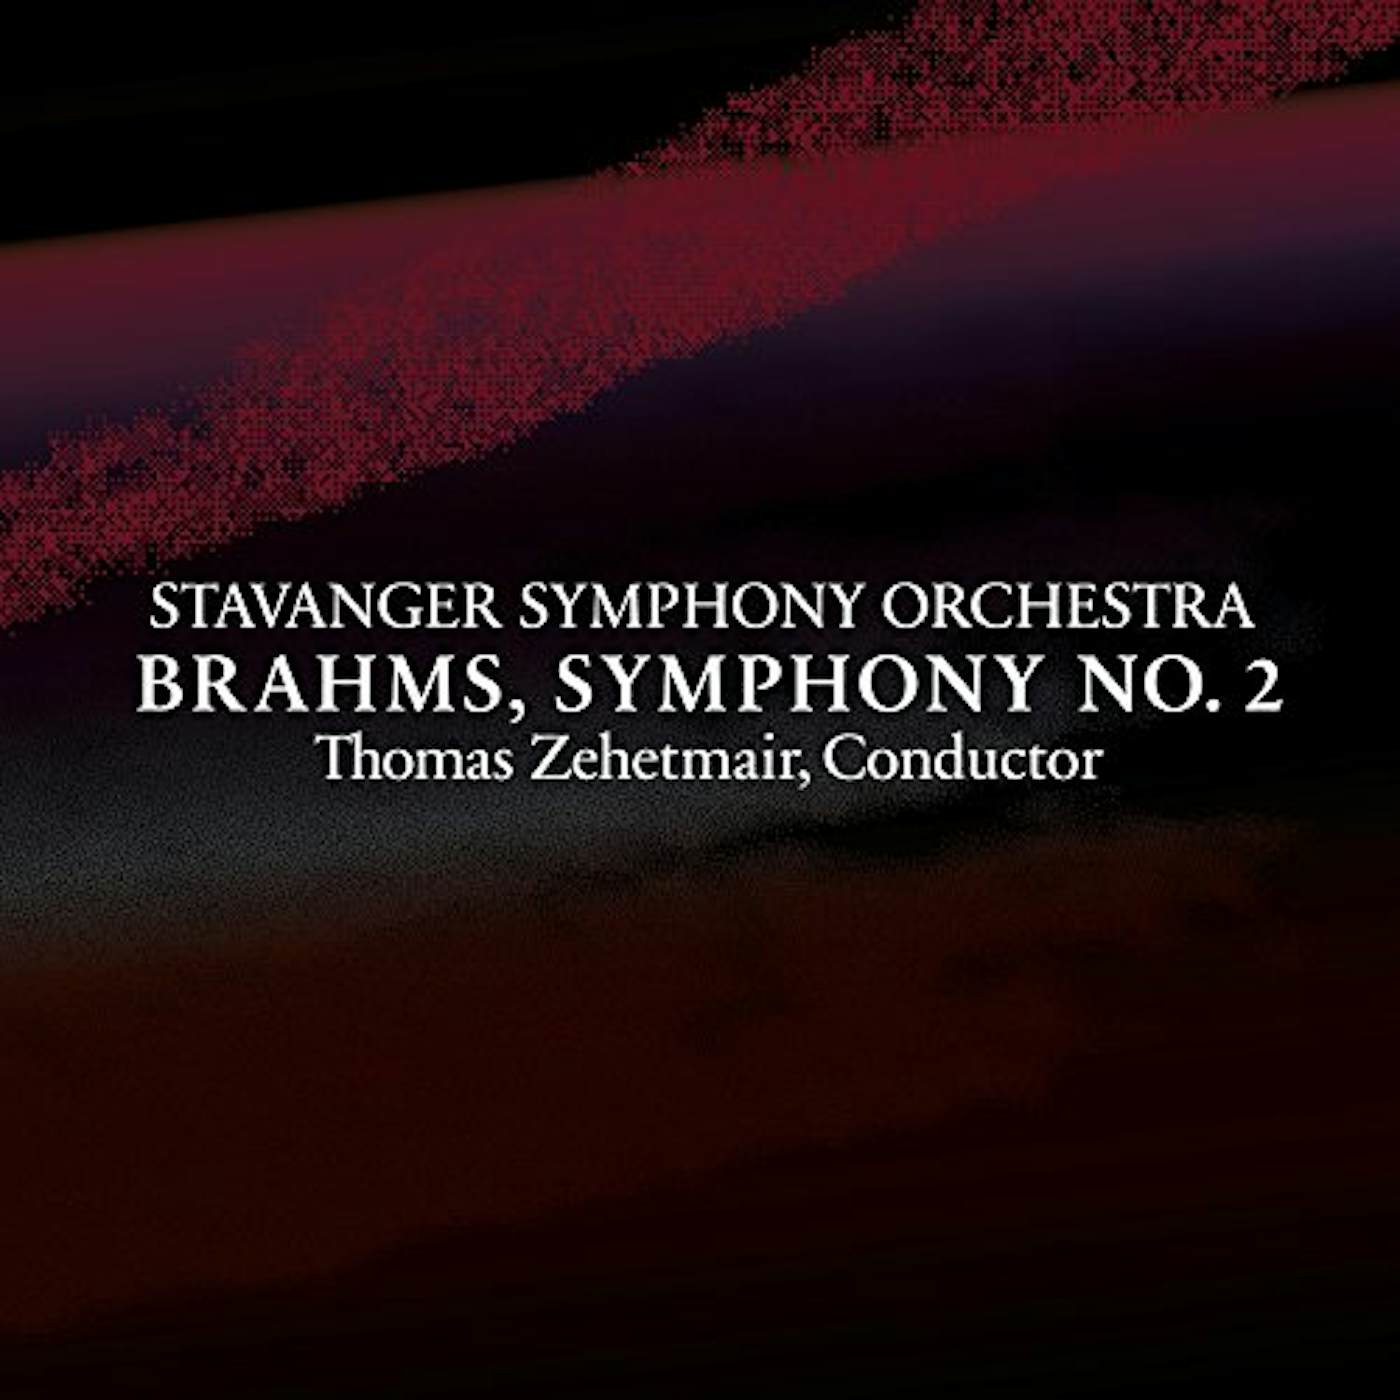 Stavanger Symphony Orchestra BRAHMS SYMPHONY NO. 2 IN D MAJOR OP. 73 Vinyl Record